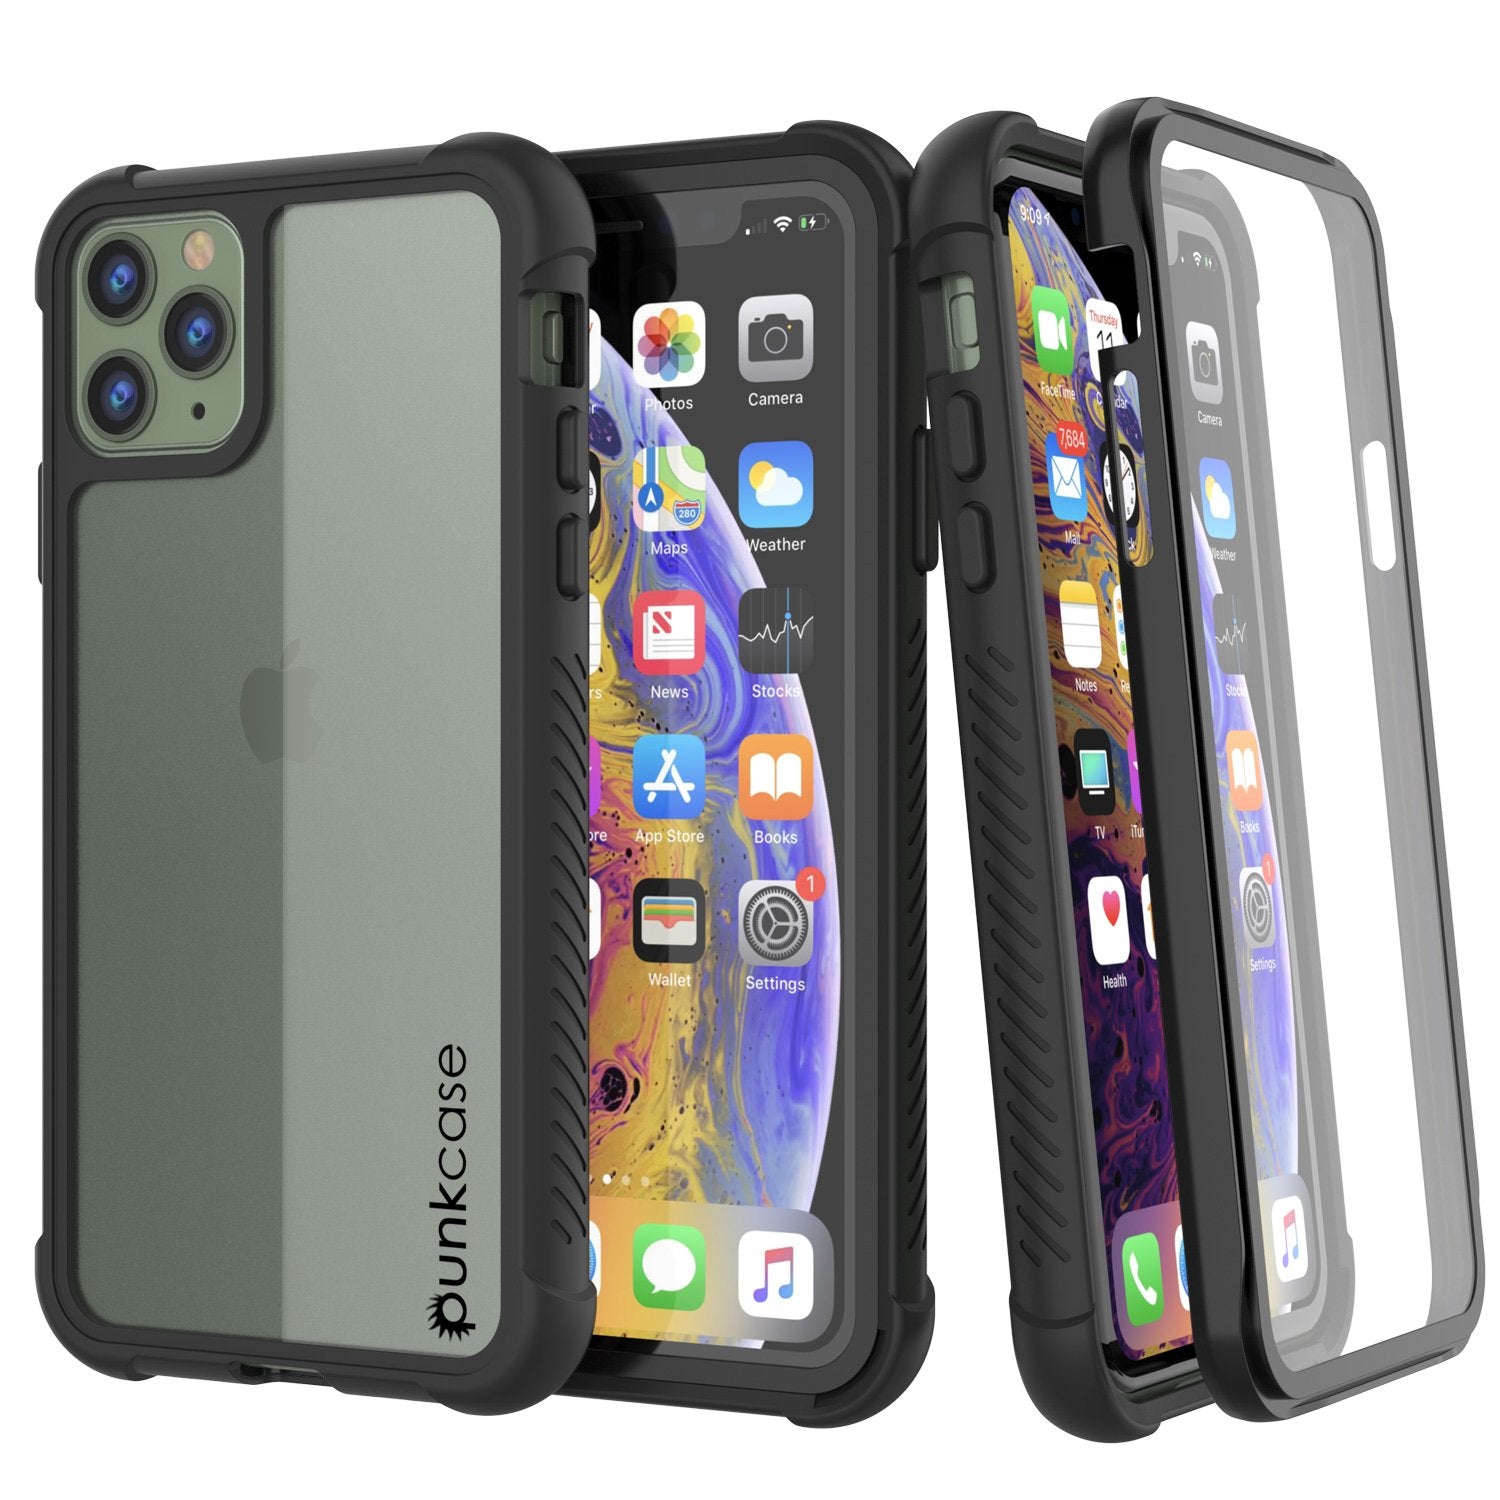 Punkcase Iphone 11 Pro Case Spartan Series Clear Rugged Heavy Duty Avatarcase